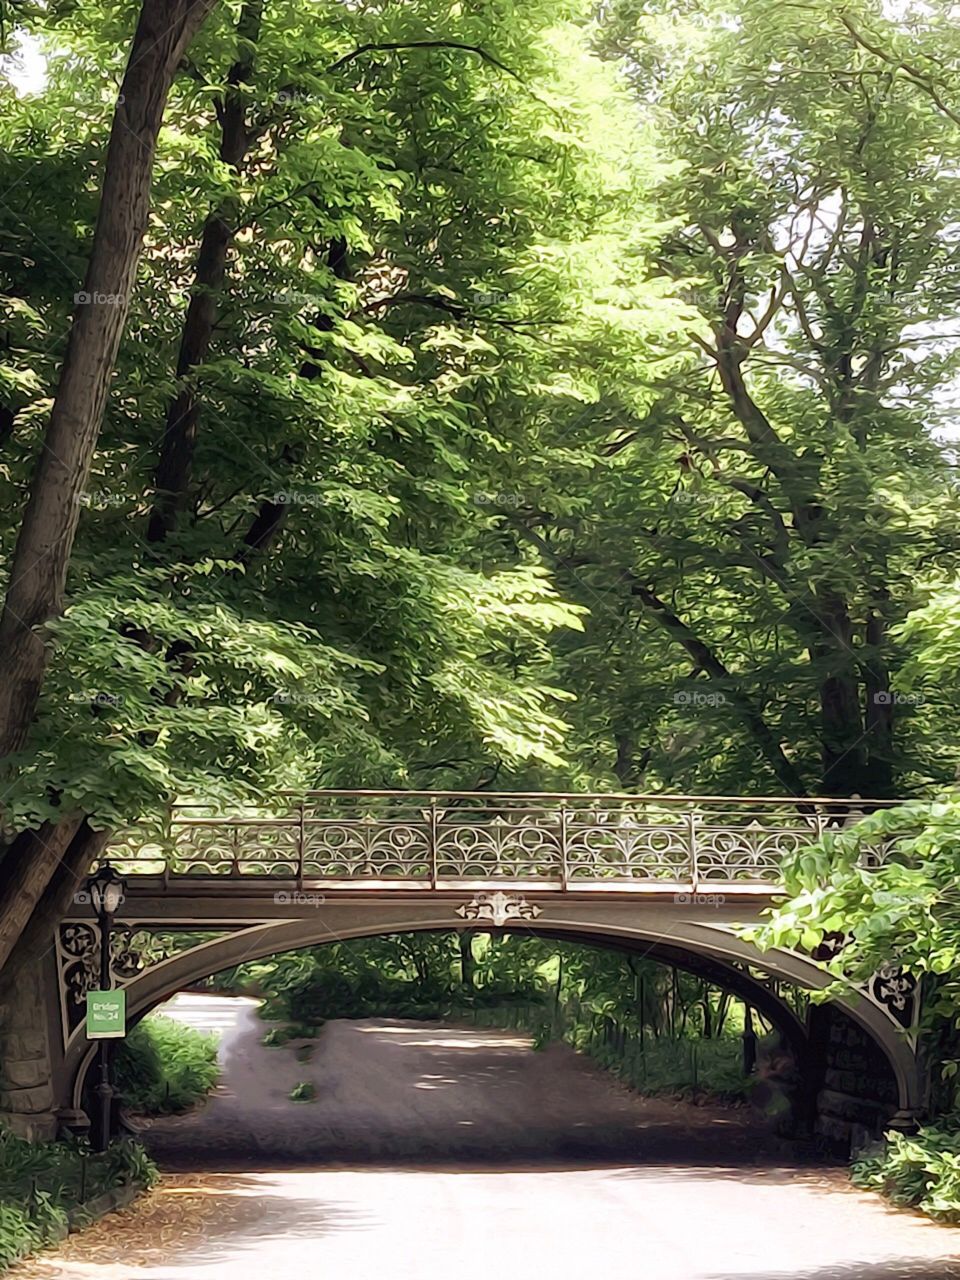 Bridge 24 - Central Park, New York City. Instagram,@PennyPeronto